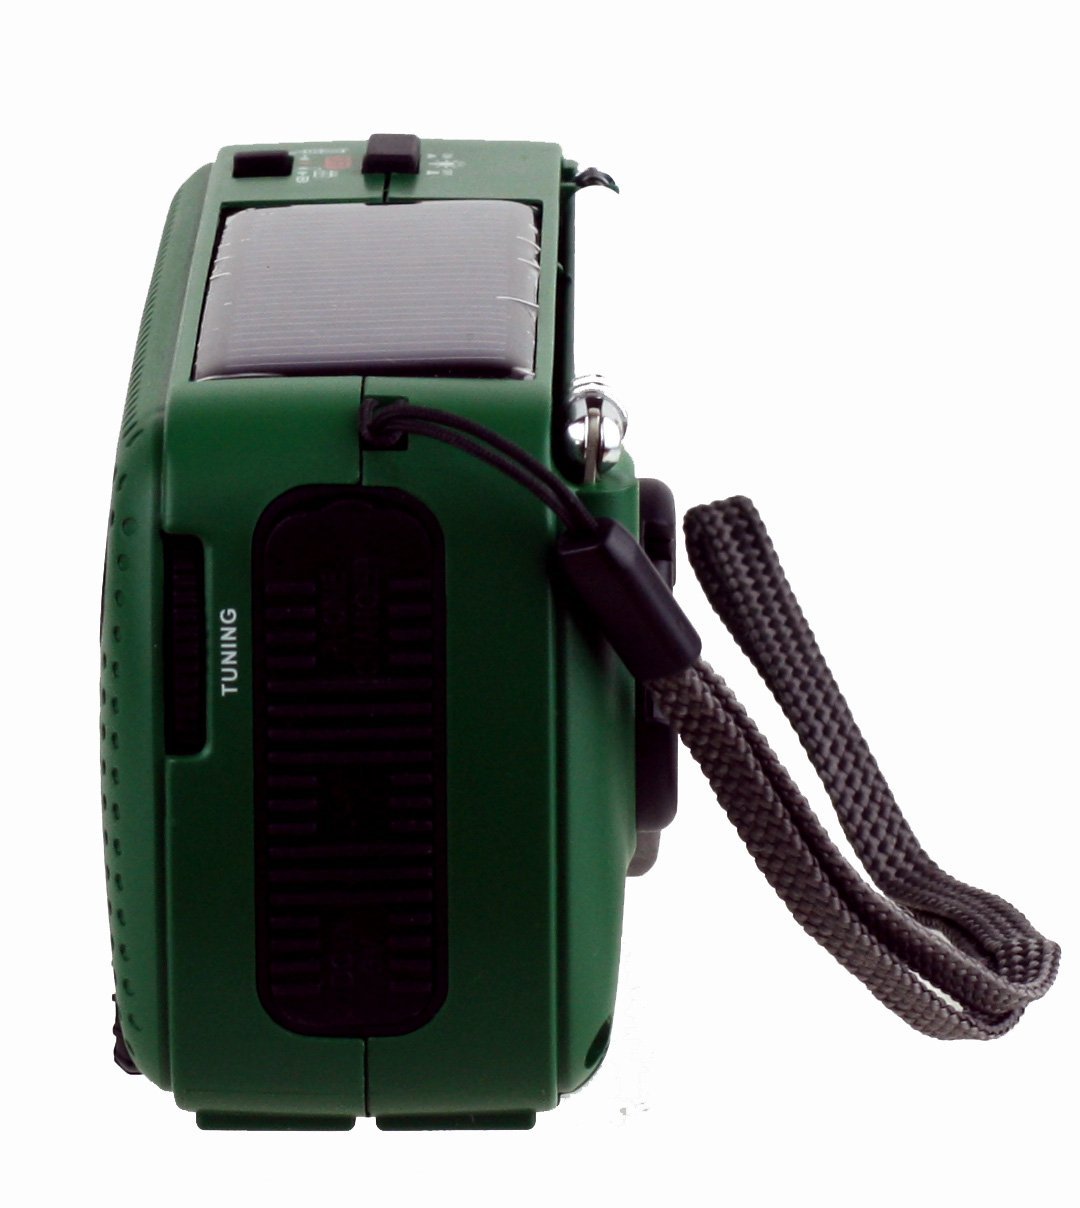 Kaito Portable AM/FM Radios, Green, V1-GRN - image 3 of 4